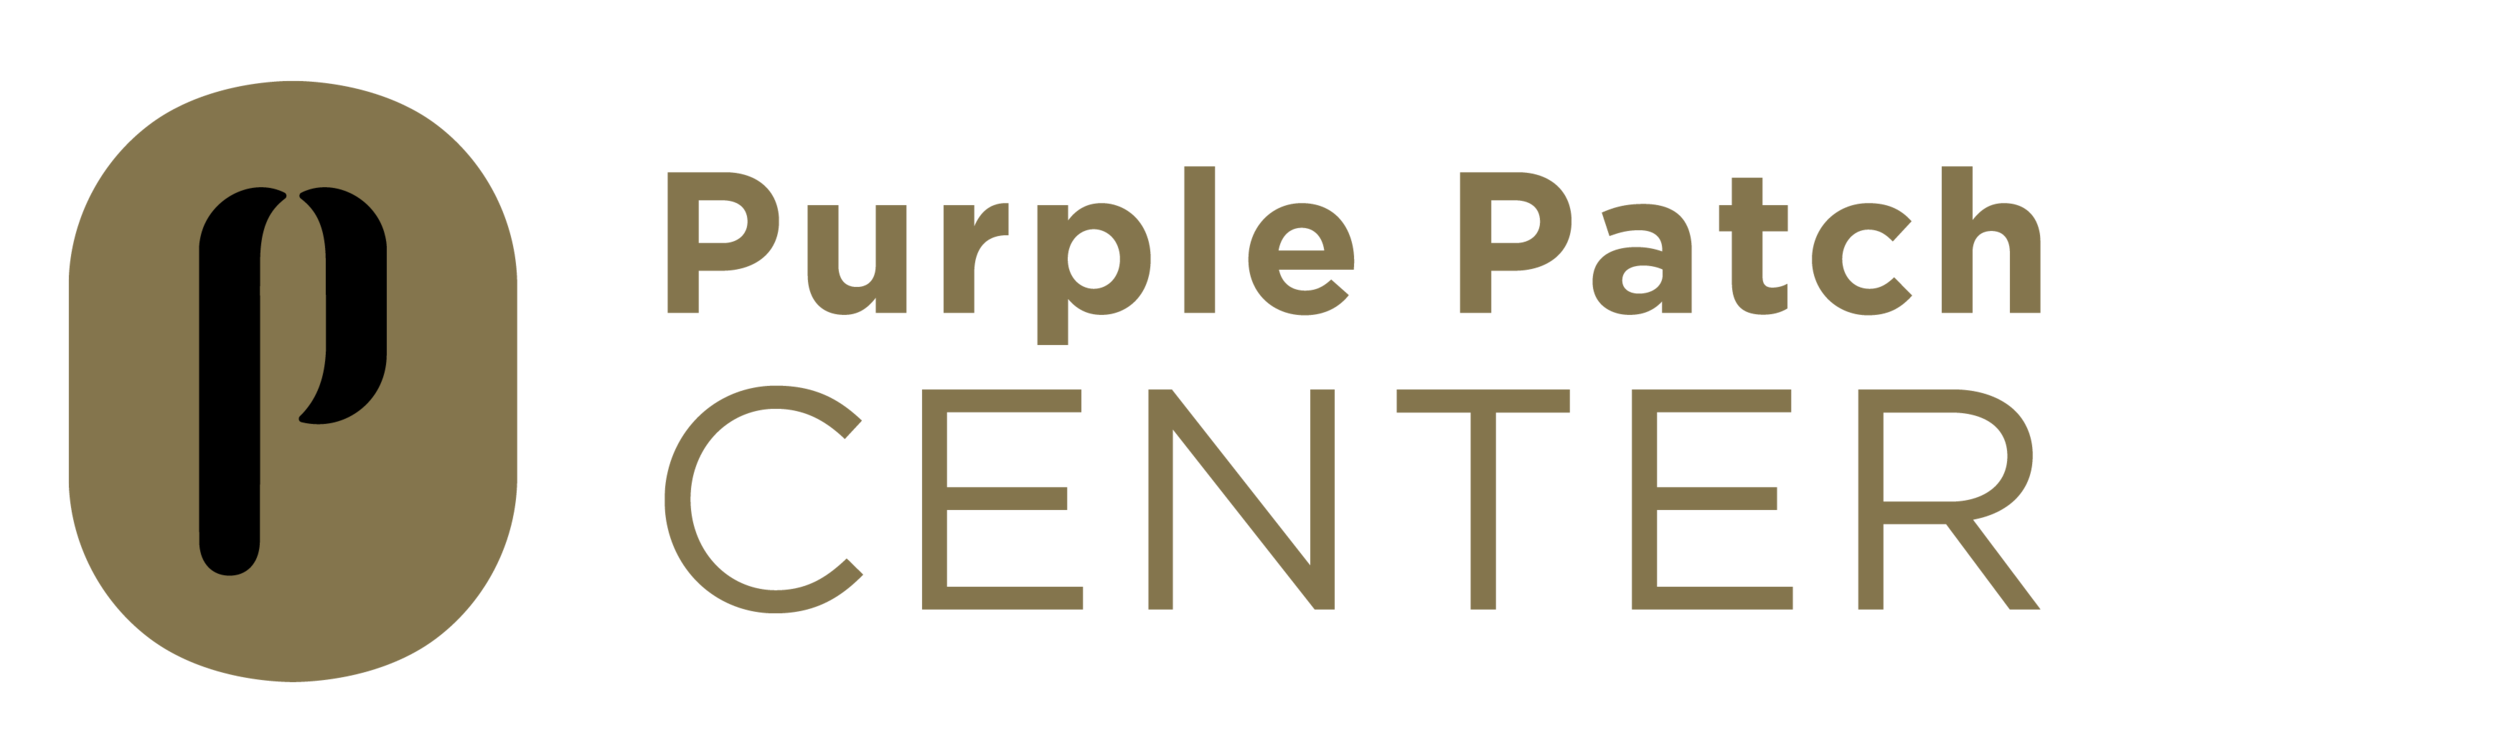 Purple Patch Center